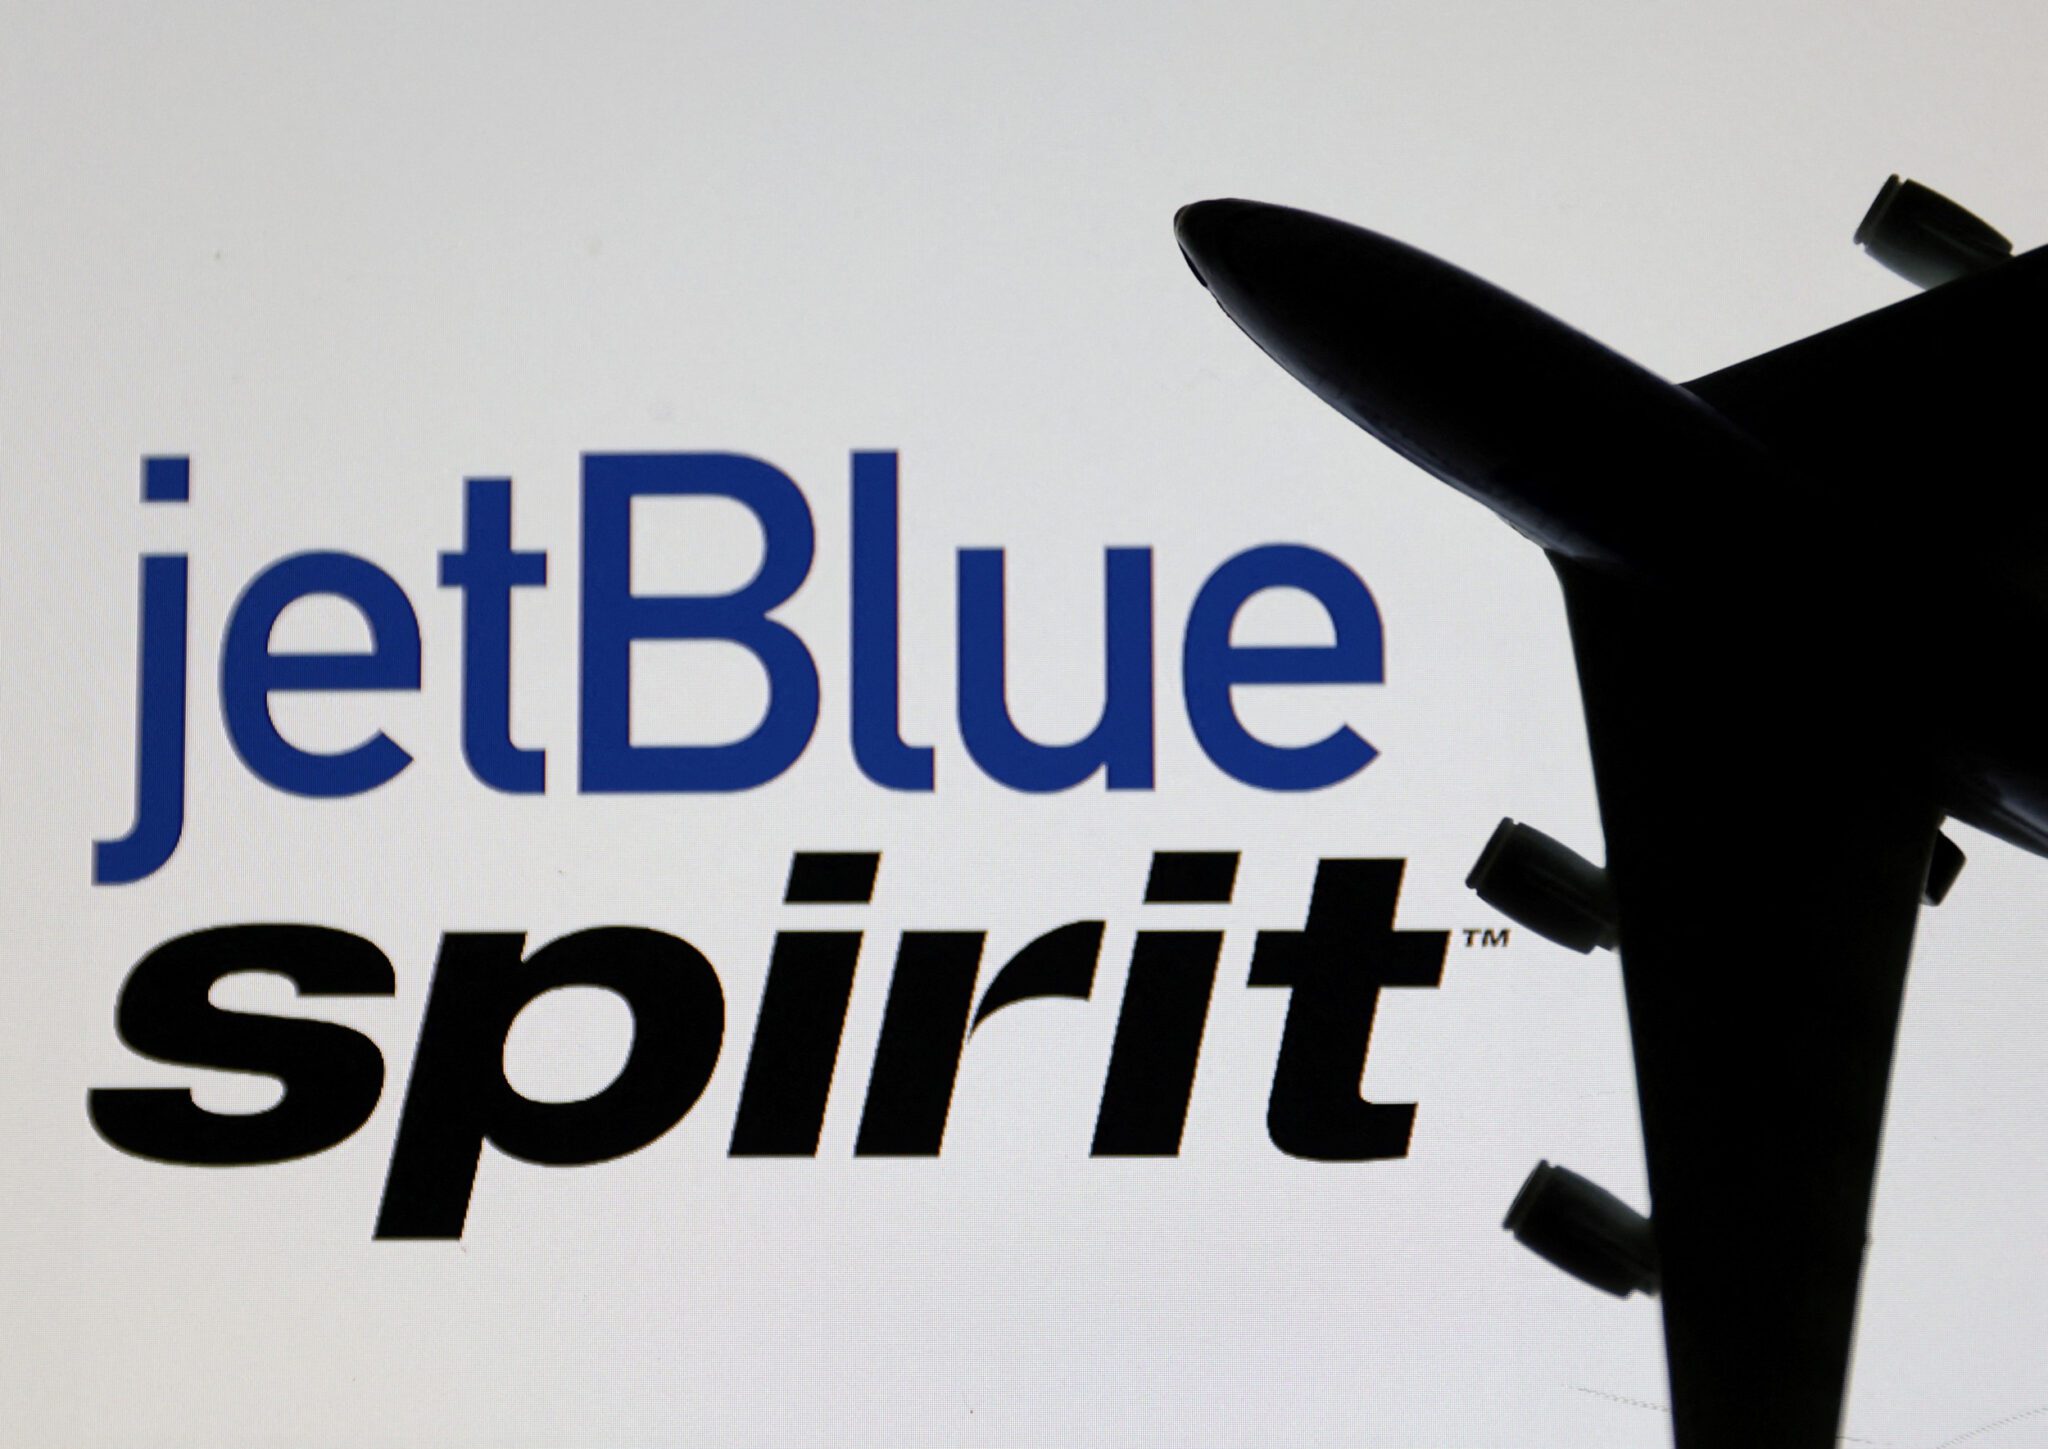 JetBlue-Spirit Fusie de enige manier om te groeien, zegt JetBlue CEO